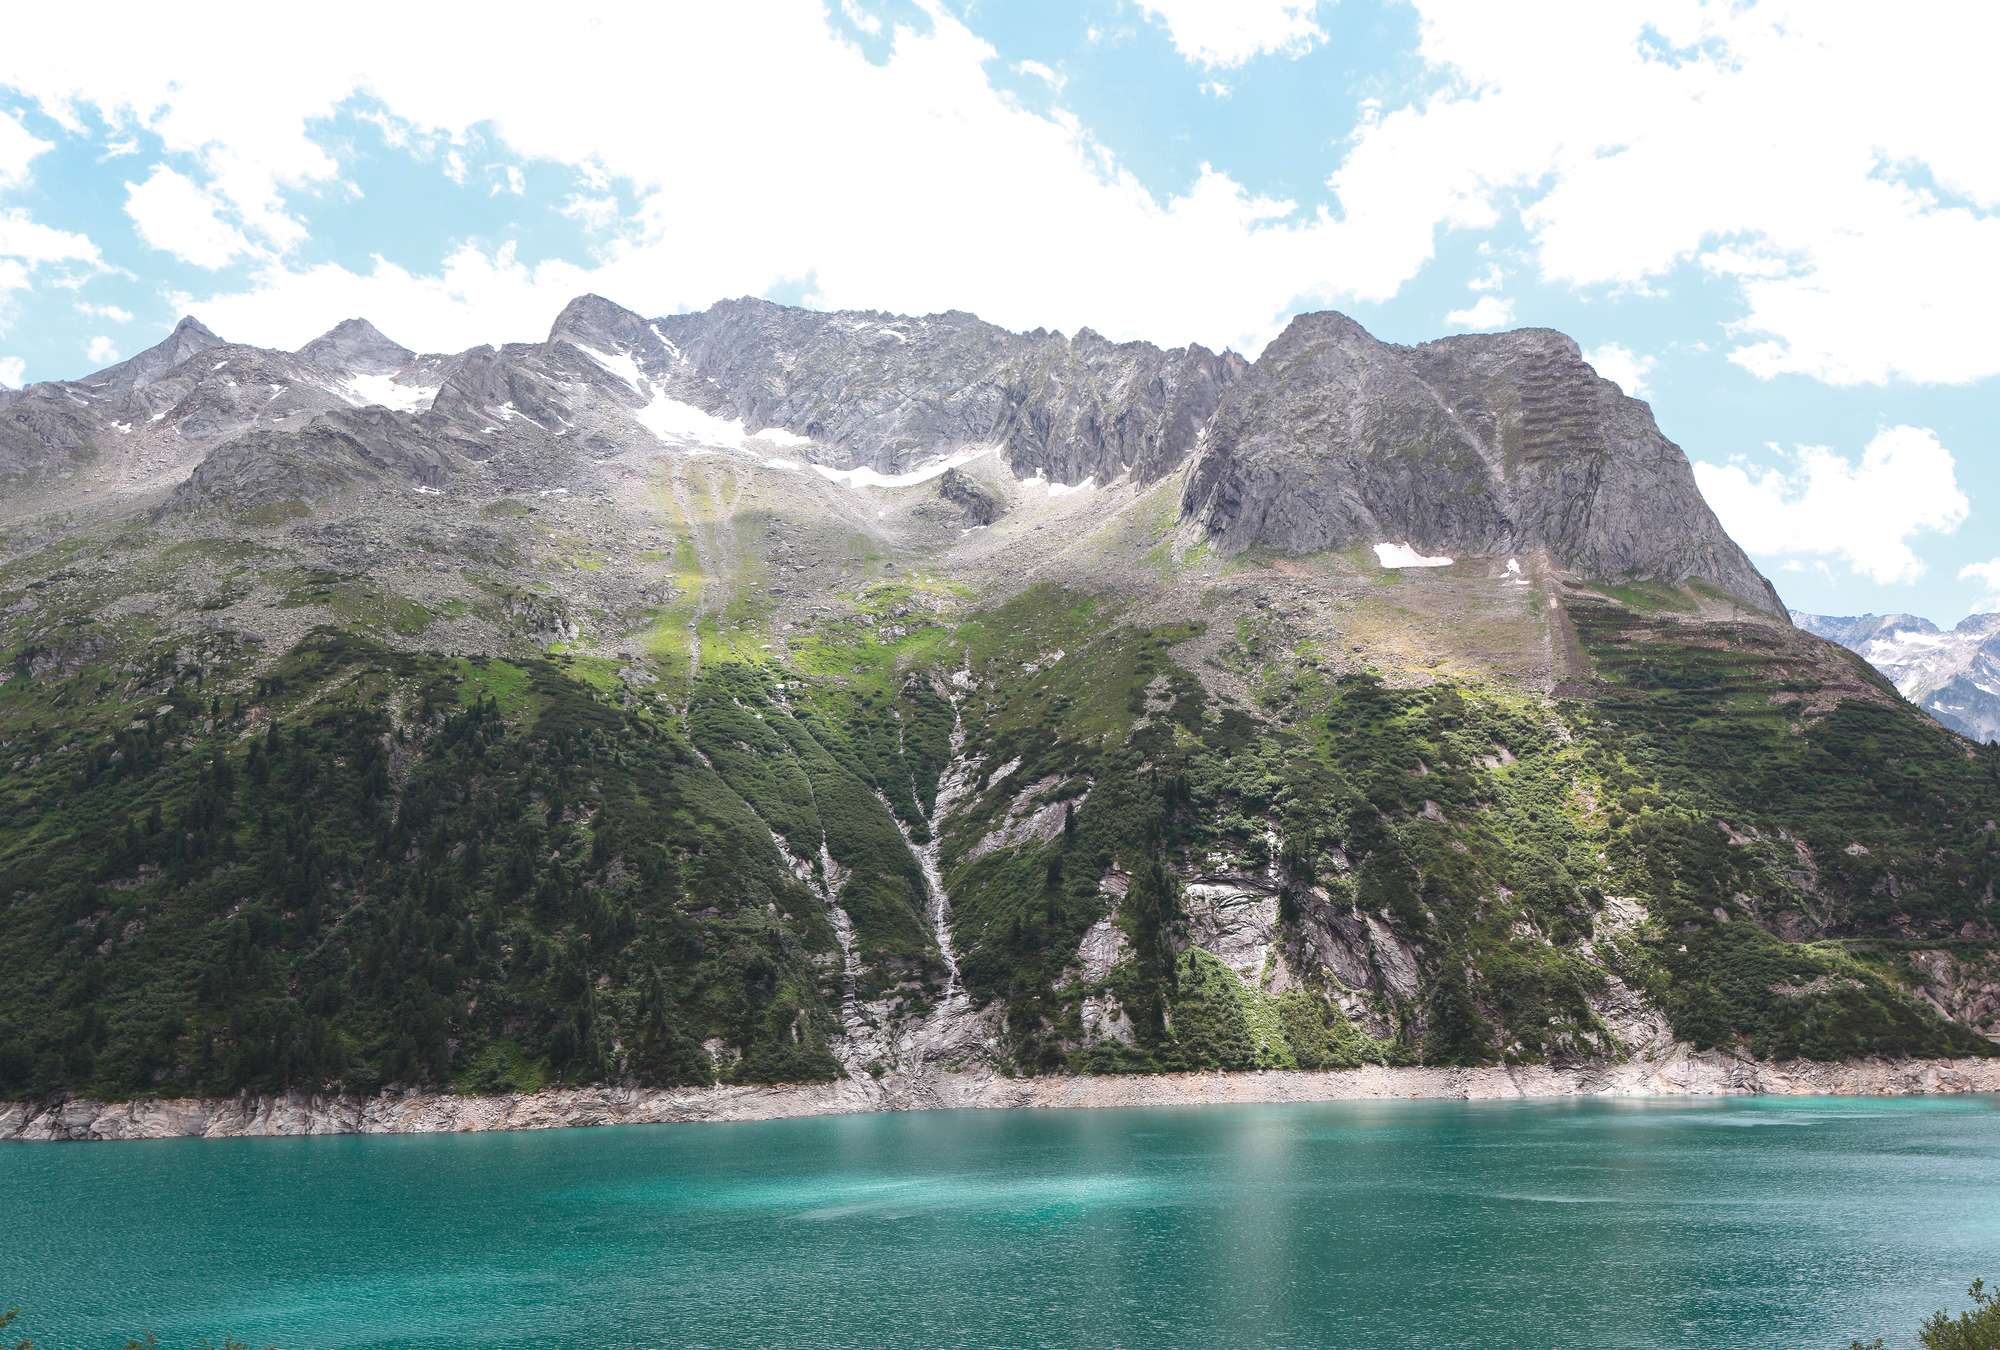             Fototapete Gebirgslandschaft mit Alpensee
        